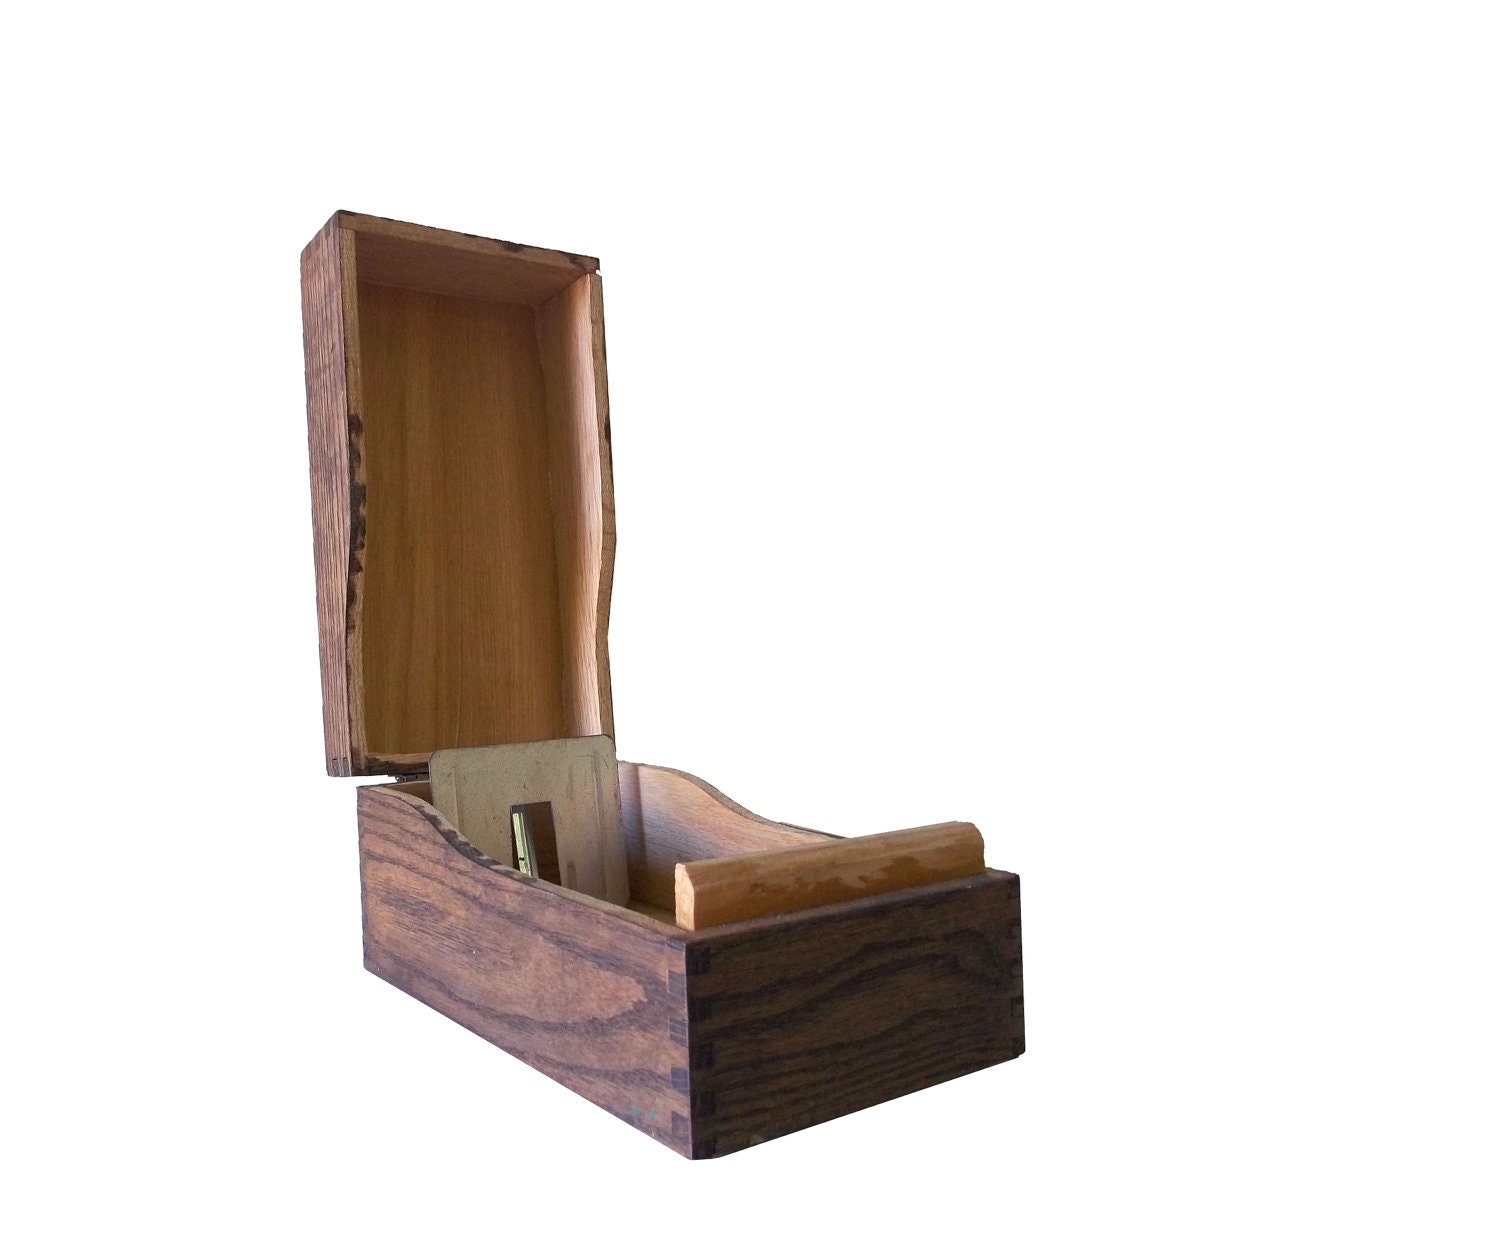 Wood Index Card Holder Box by Nuvegriz on Etsy